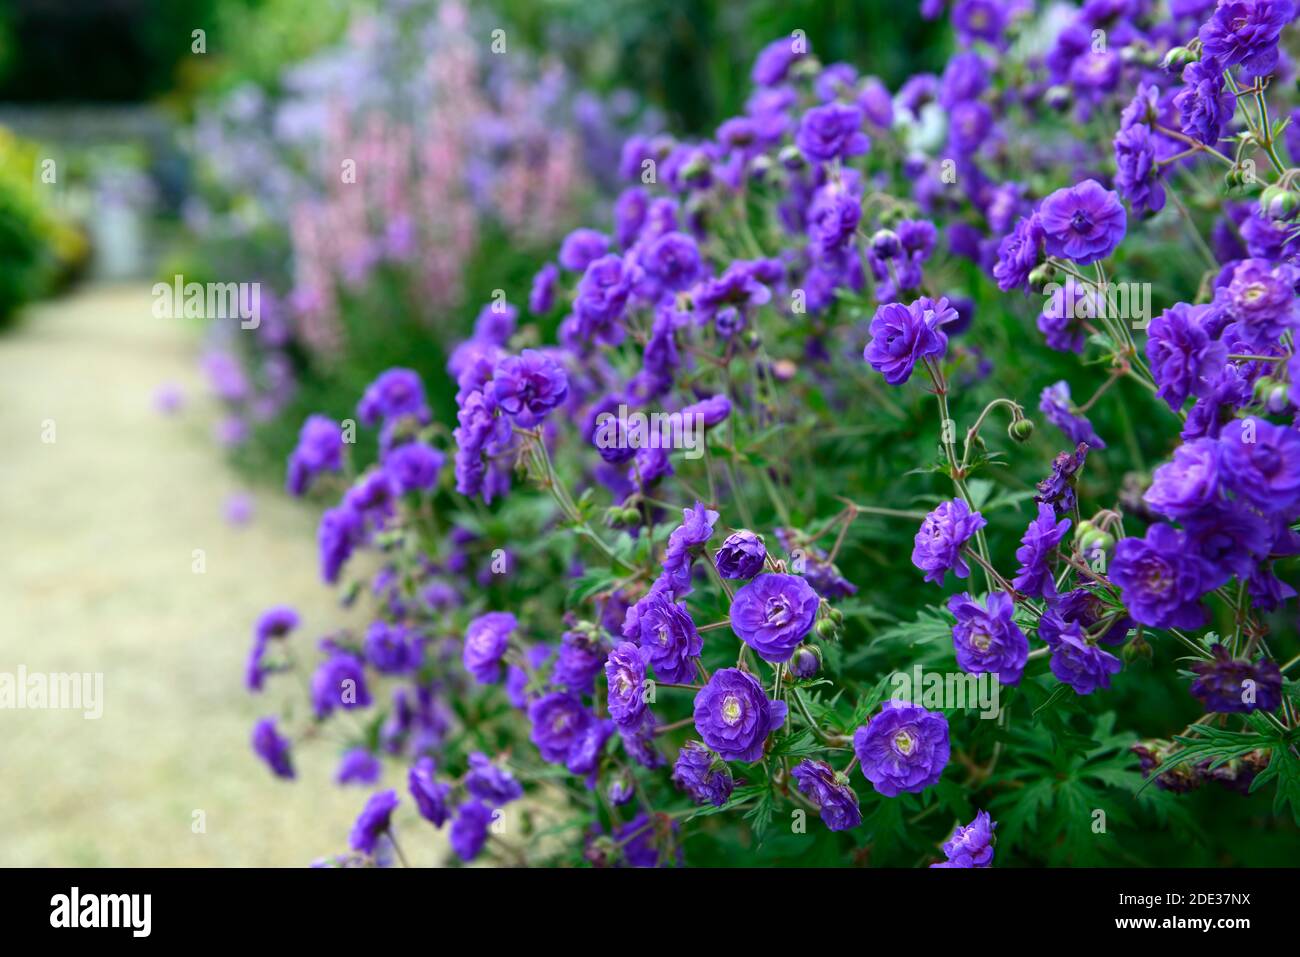 Geranium himalayense plenum,Geranium himalayense Birch's Double,double gernaium flowers,violet double ruffled flowers,violet,blue,purple,flowering, Stock Photo